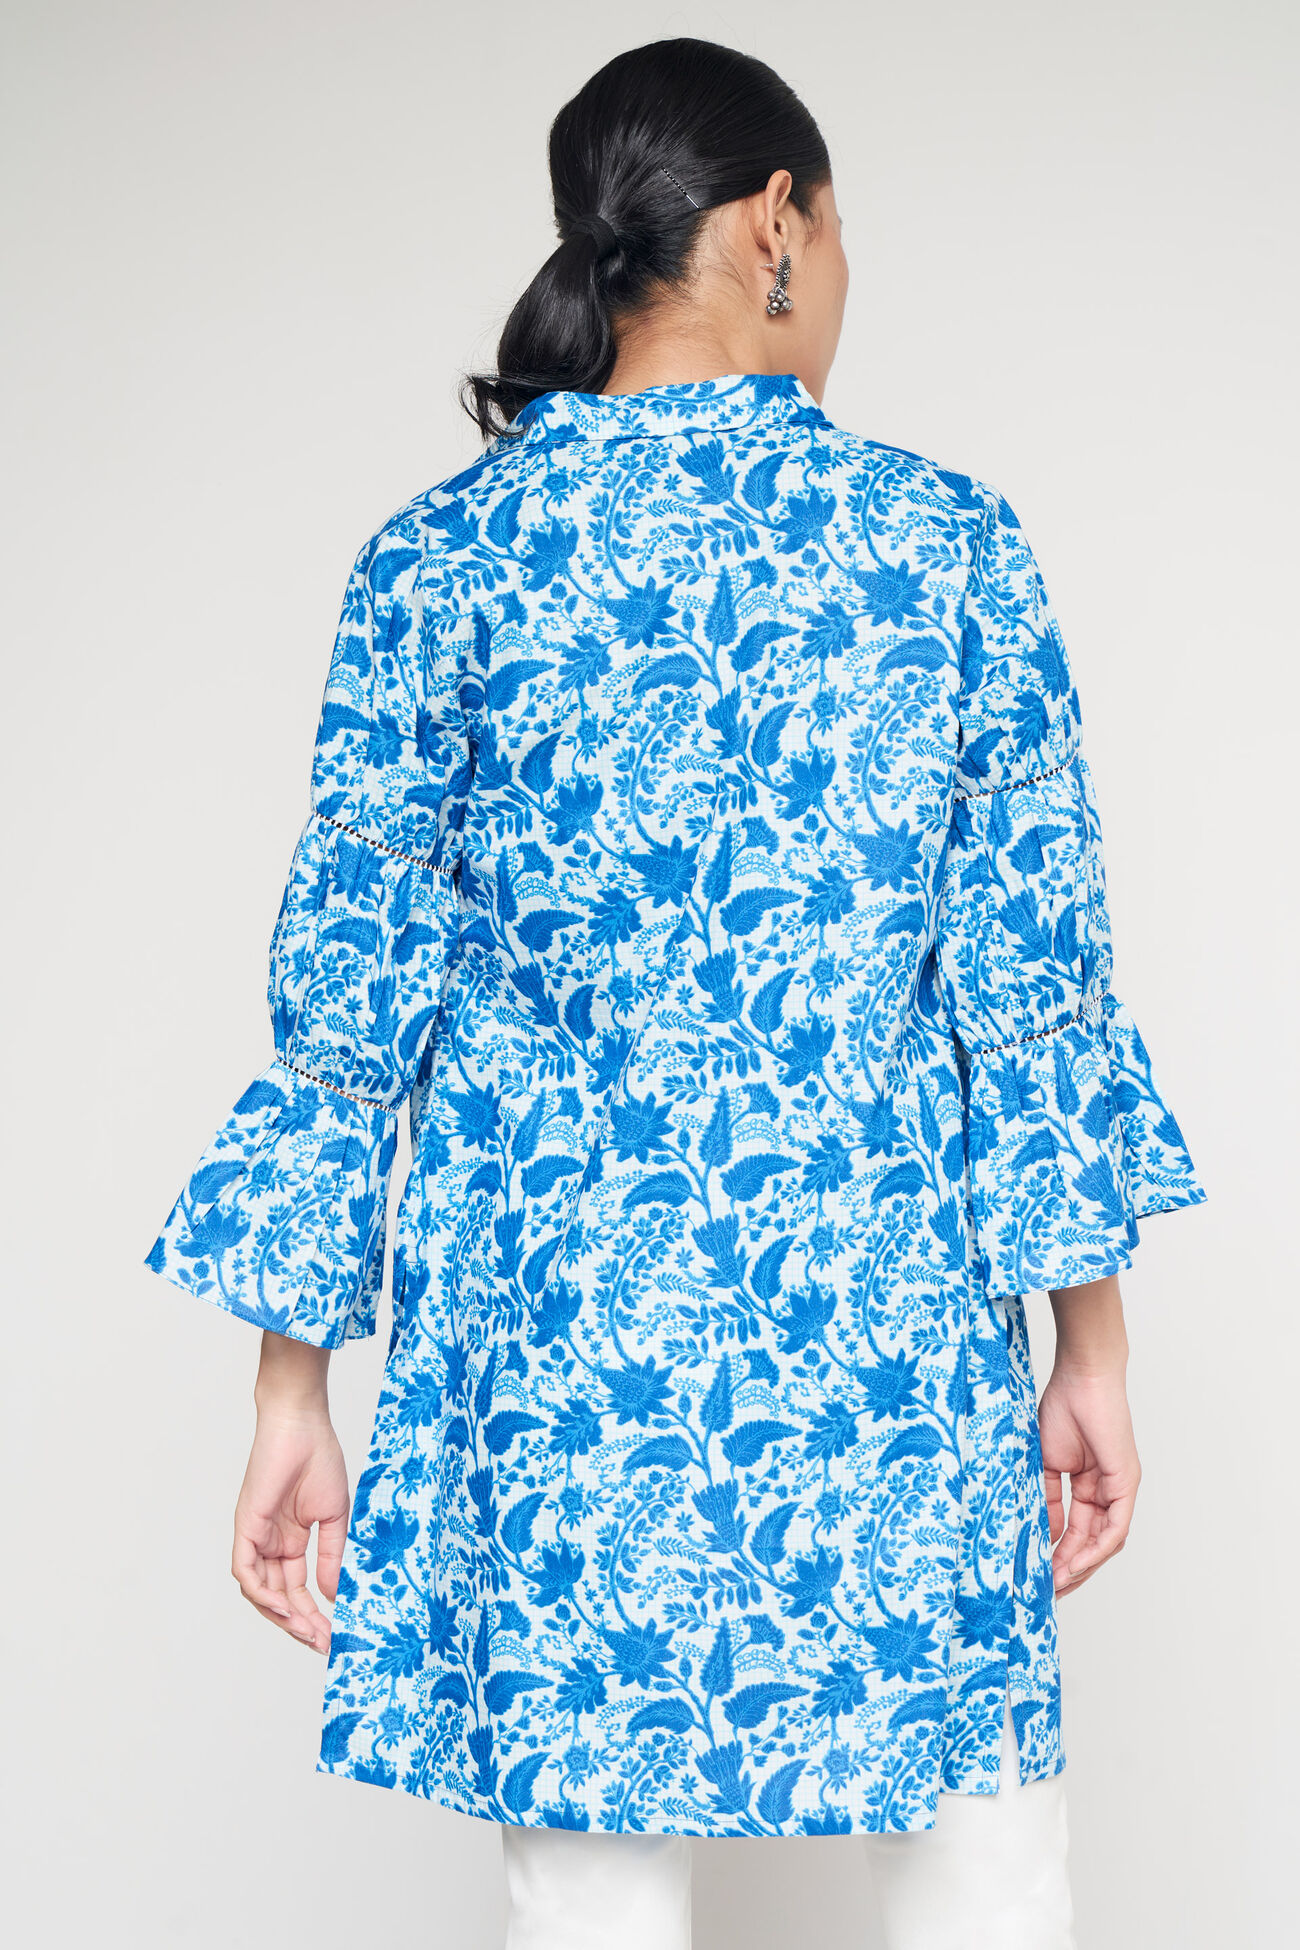 Buy Blue Floral Shirt Style Set Online at Best Price at Global Desi ...